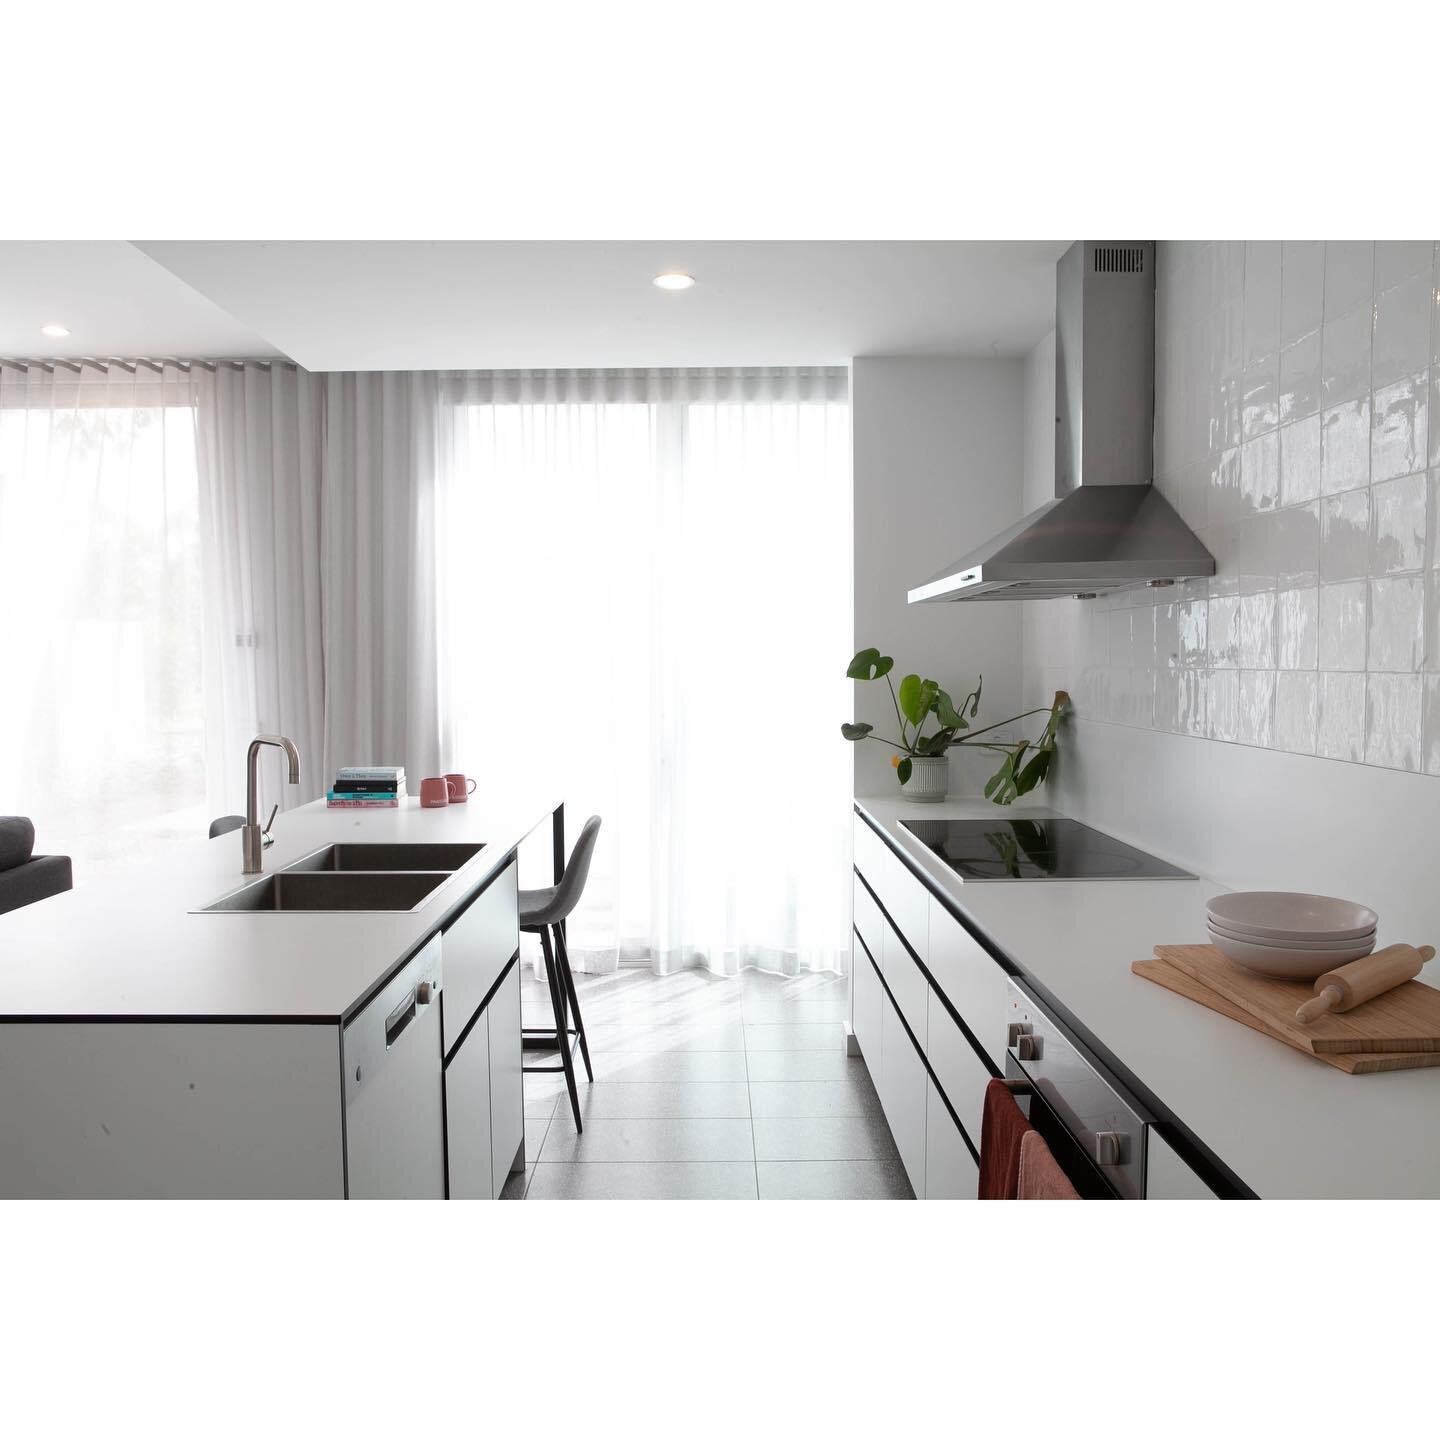 // Kambah Dual Occupancy

Architect &amp; Interior Design: @de.rome.architects 
Photography: @jodiederome 
Builder: @simmo.arthur 

#architecture #interiordesign #kitchen #bathroom